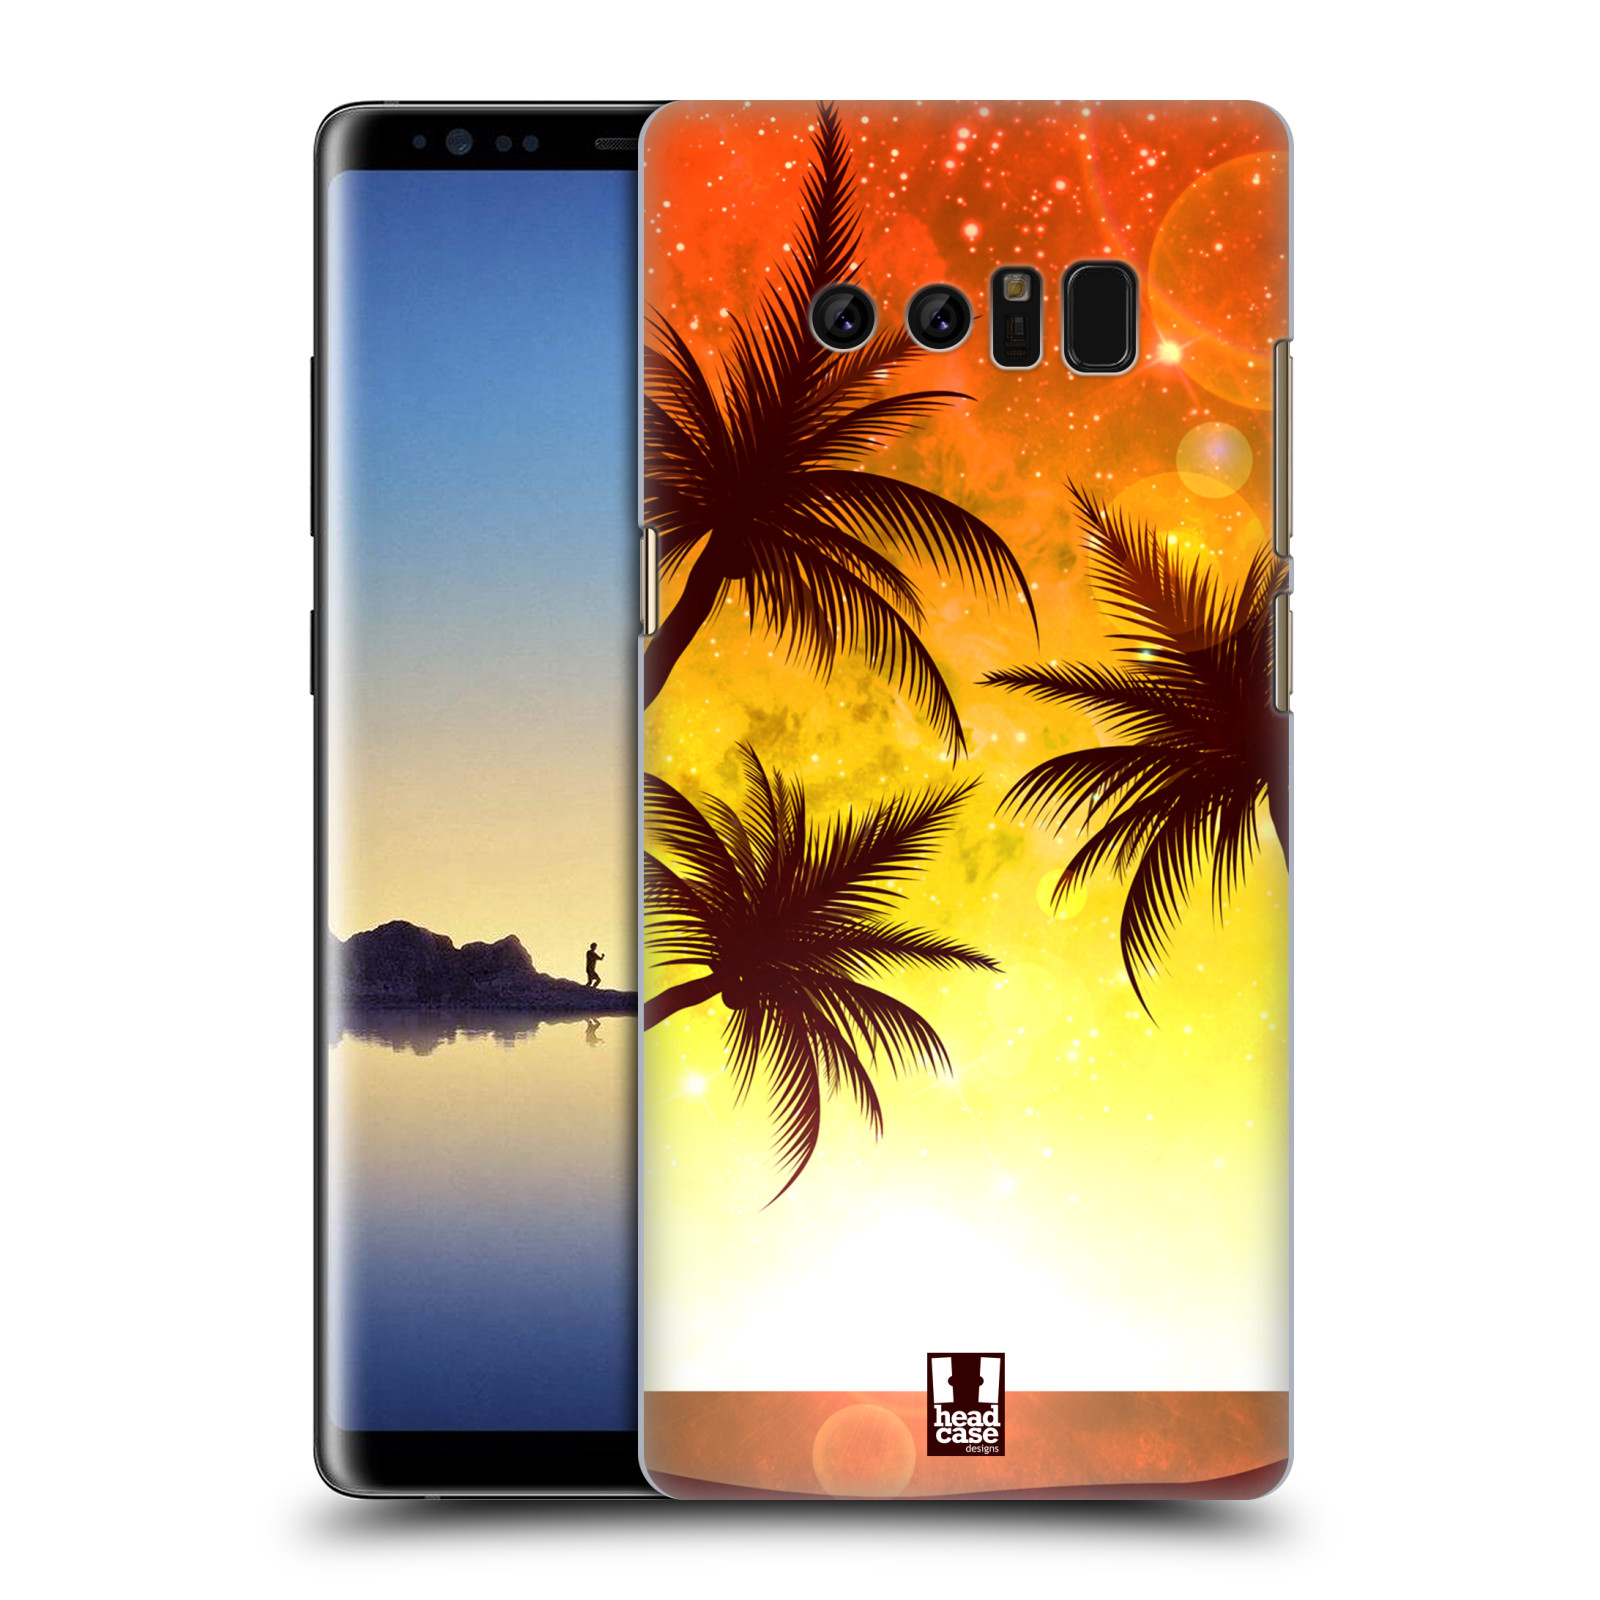 HEAD CASE plastový obal na mobil Samsung Galaxy Note 8 vzor Kreslený motiv silueta moře a palmy ORANŽOVÁ